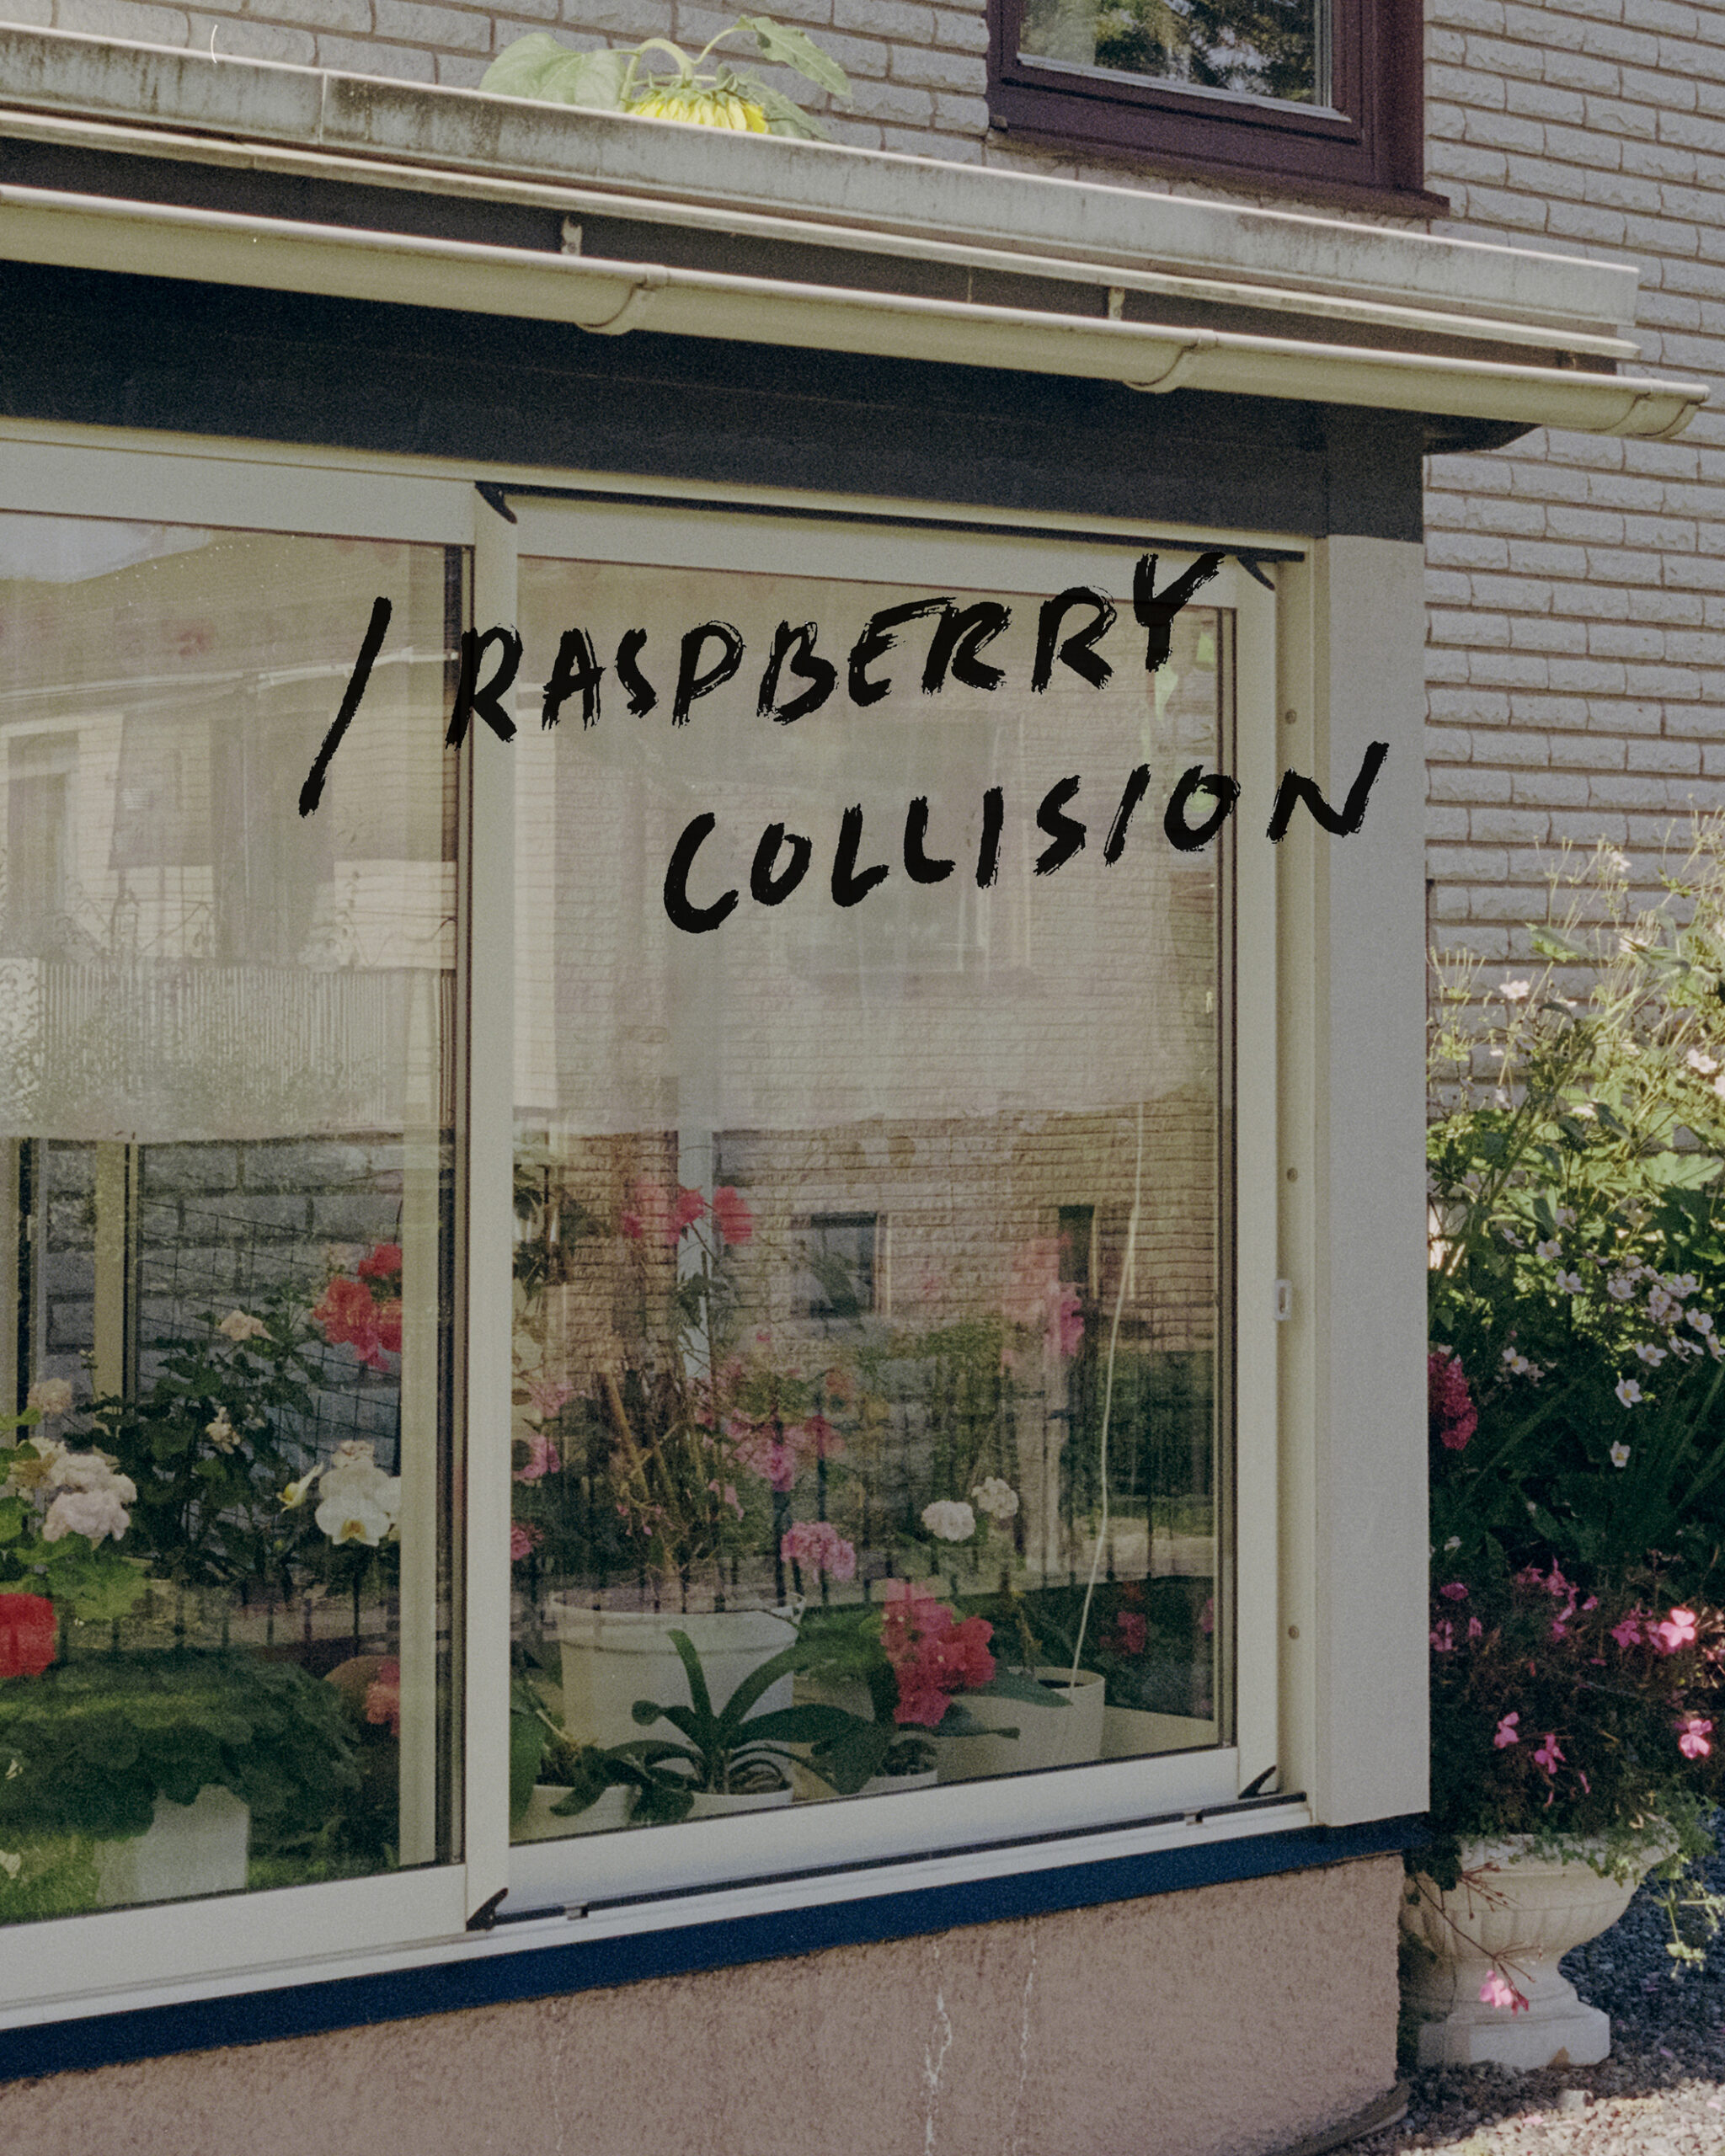 Raspberry Collision